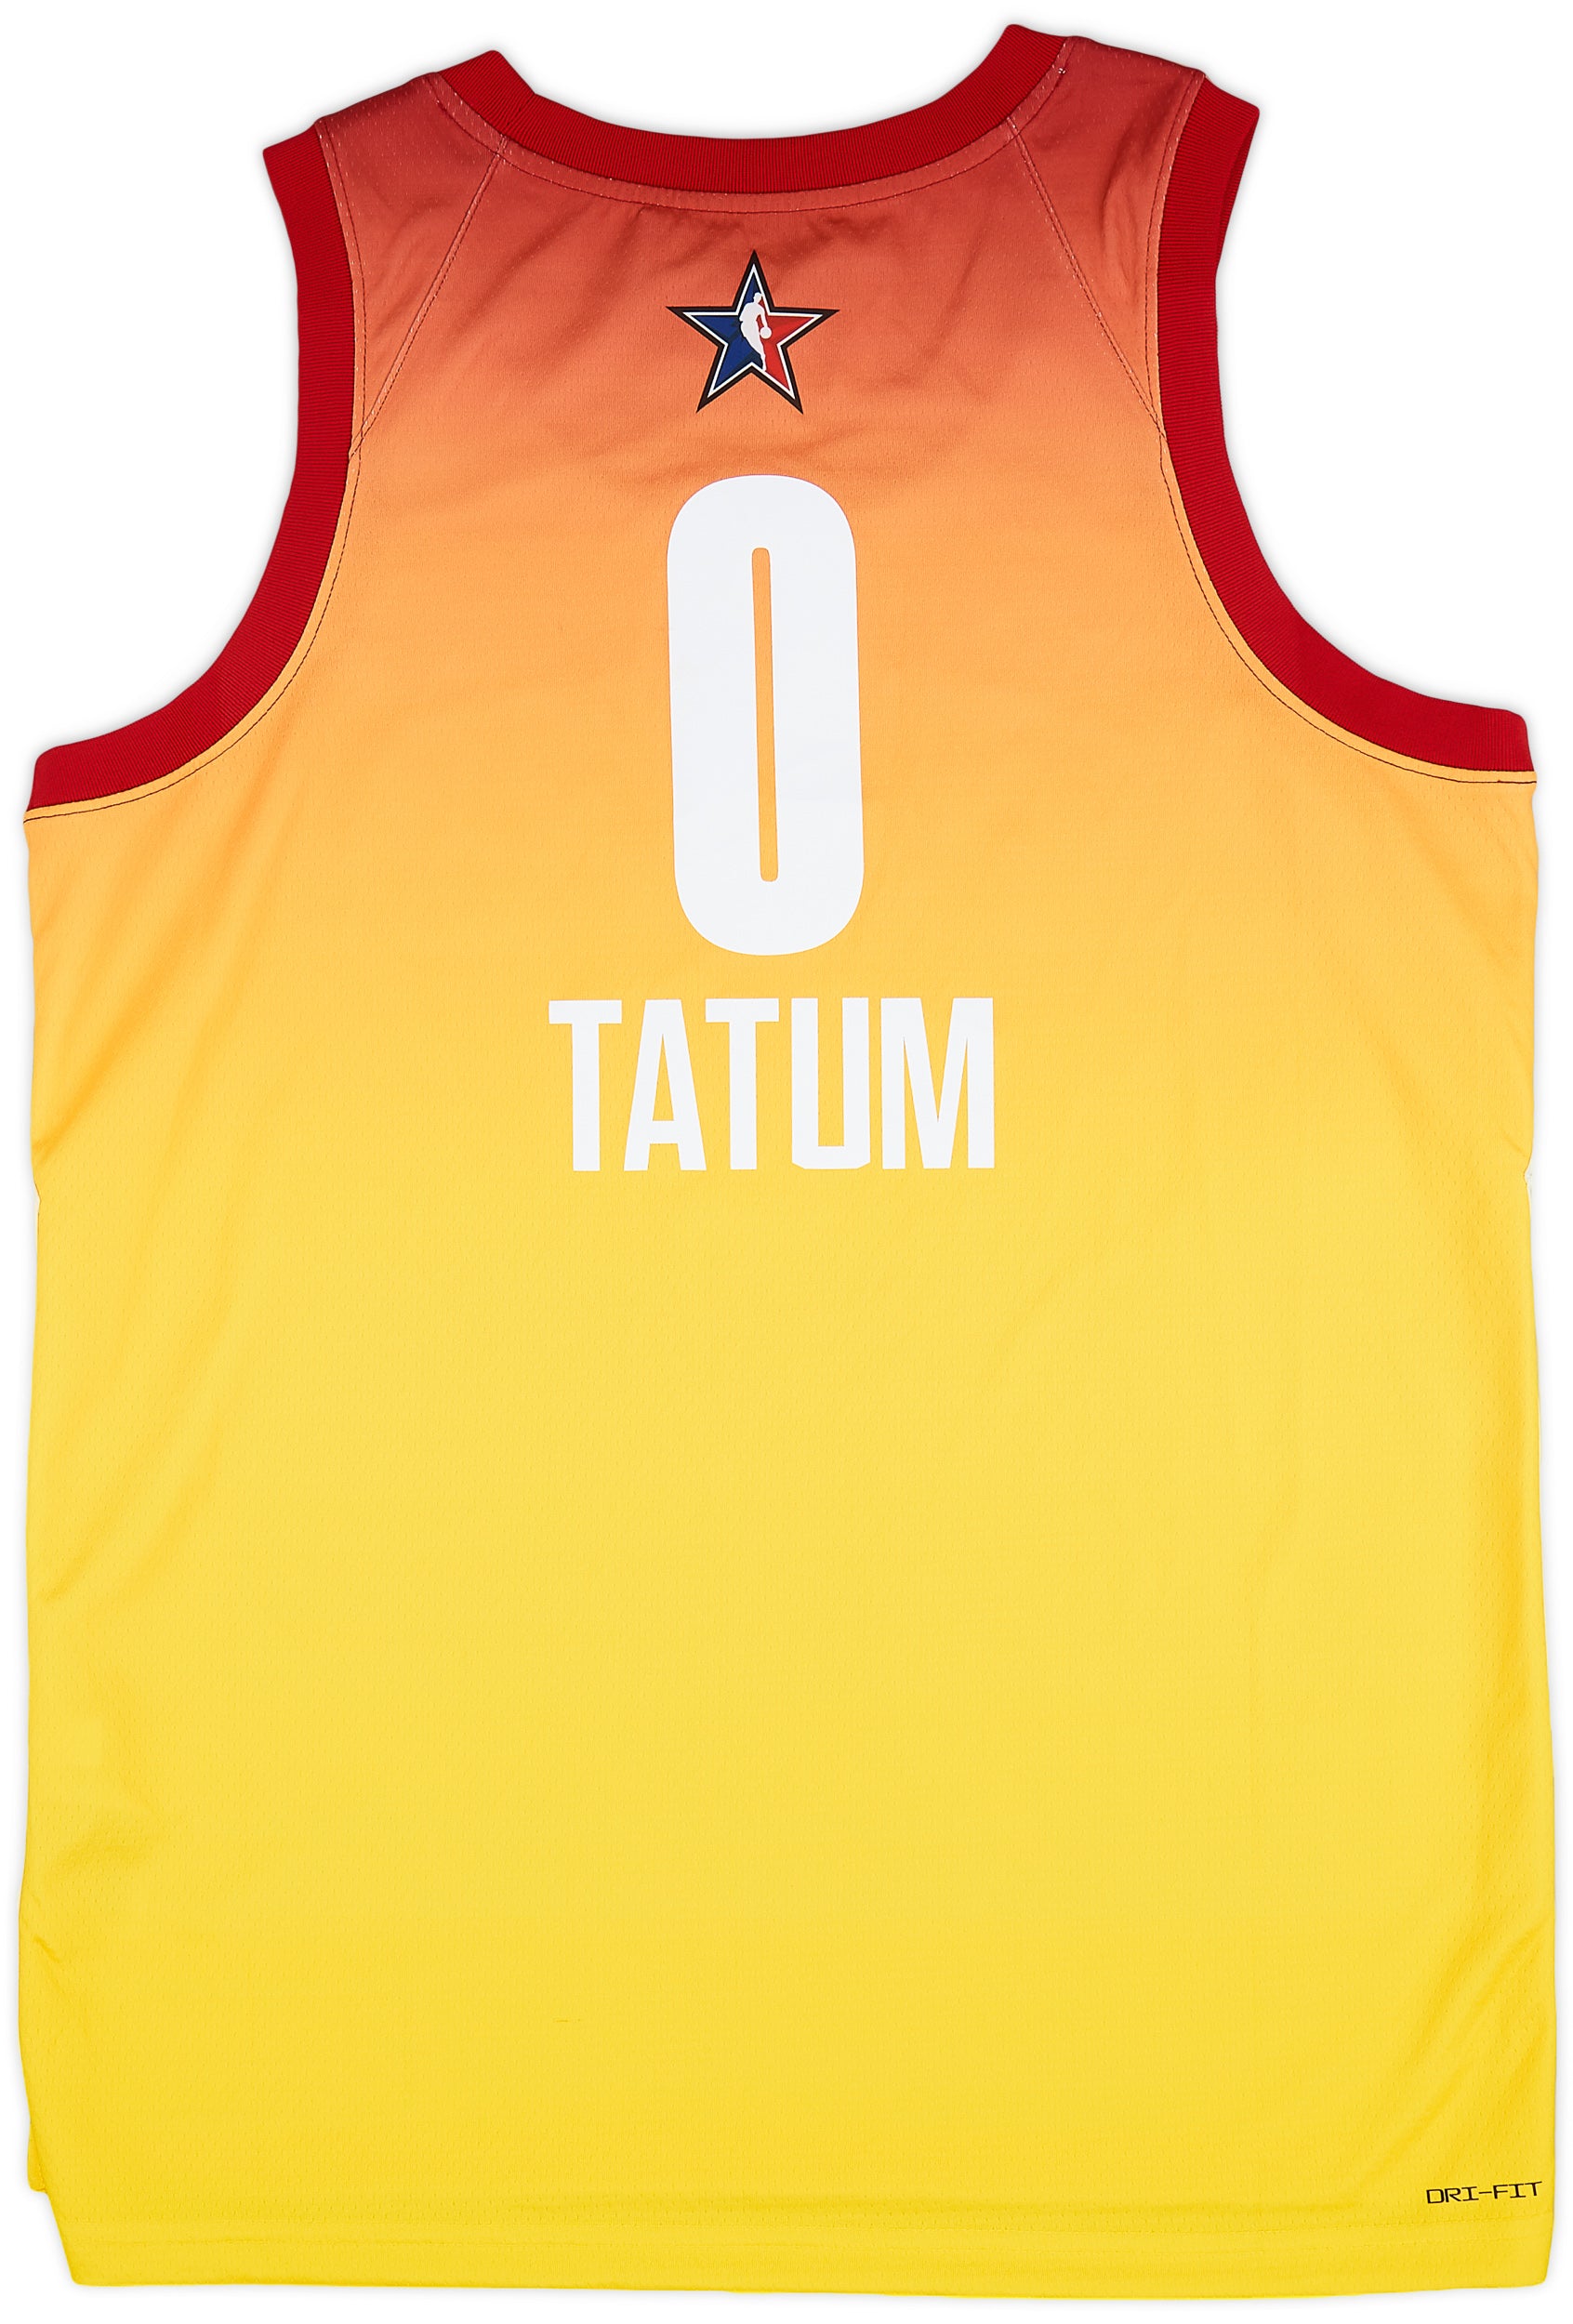 2020-23 Boston Celtics Tatum #0 Jordan Swingman Alternate Jersey (XL)